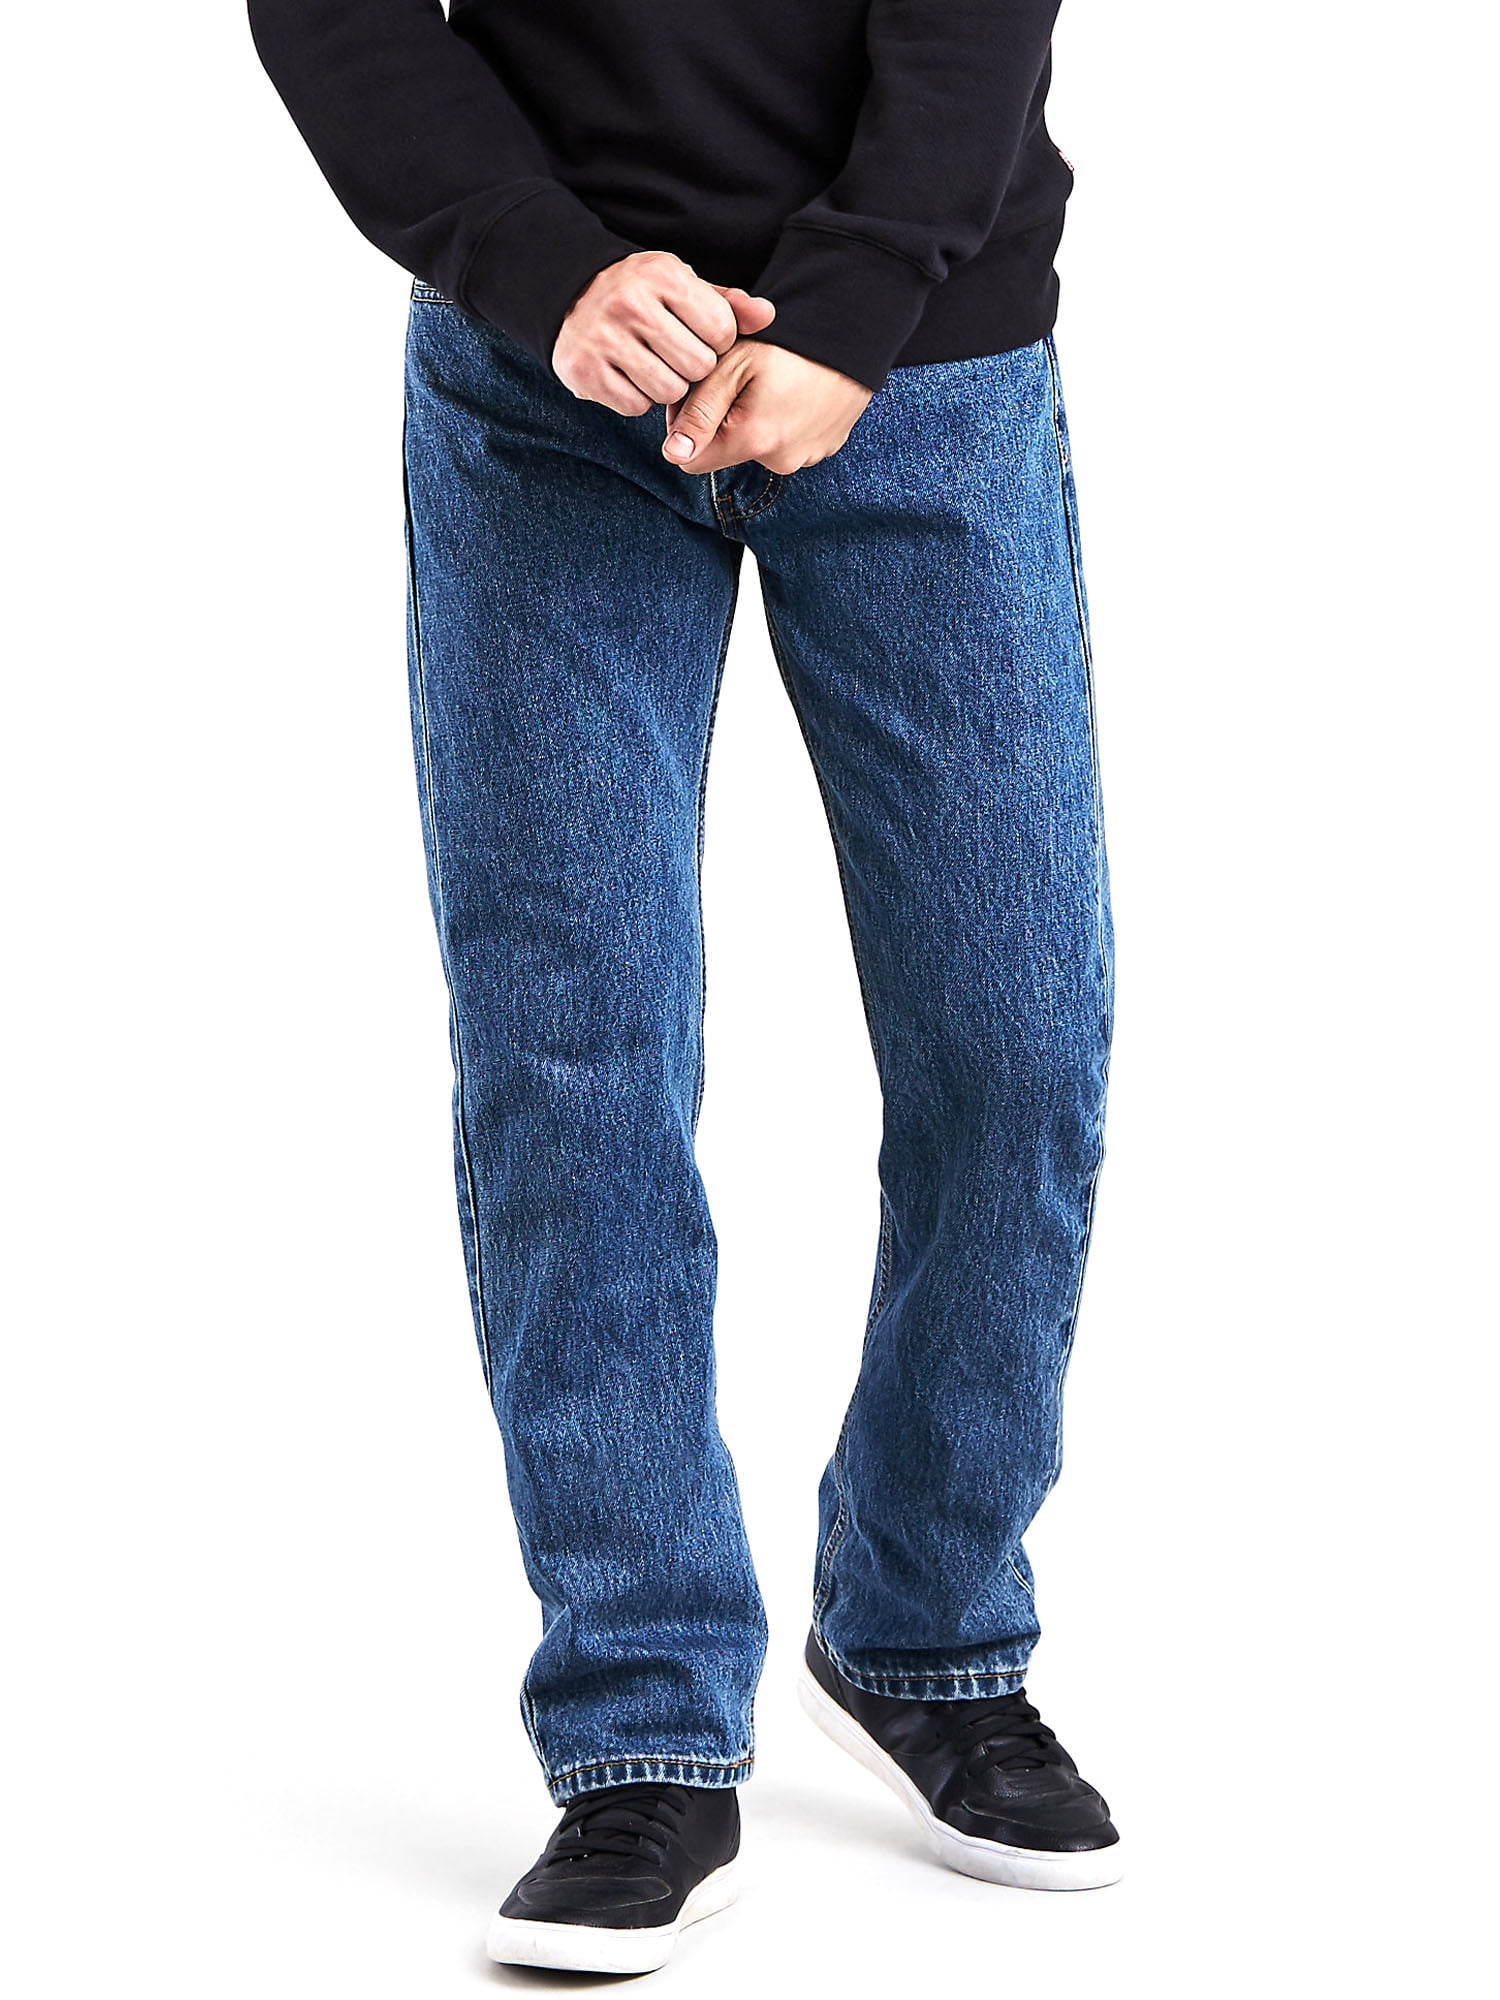 Levi's 505 Straight Leg Jeans Men's Size 31 X 34 Stretch Distressed Dark Wash 